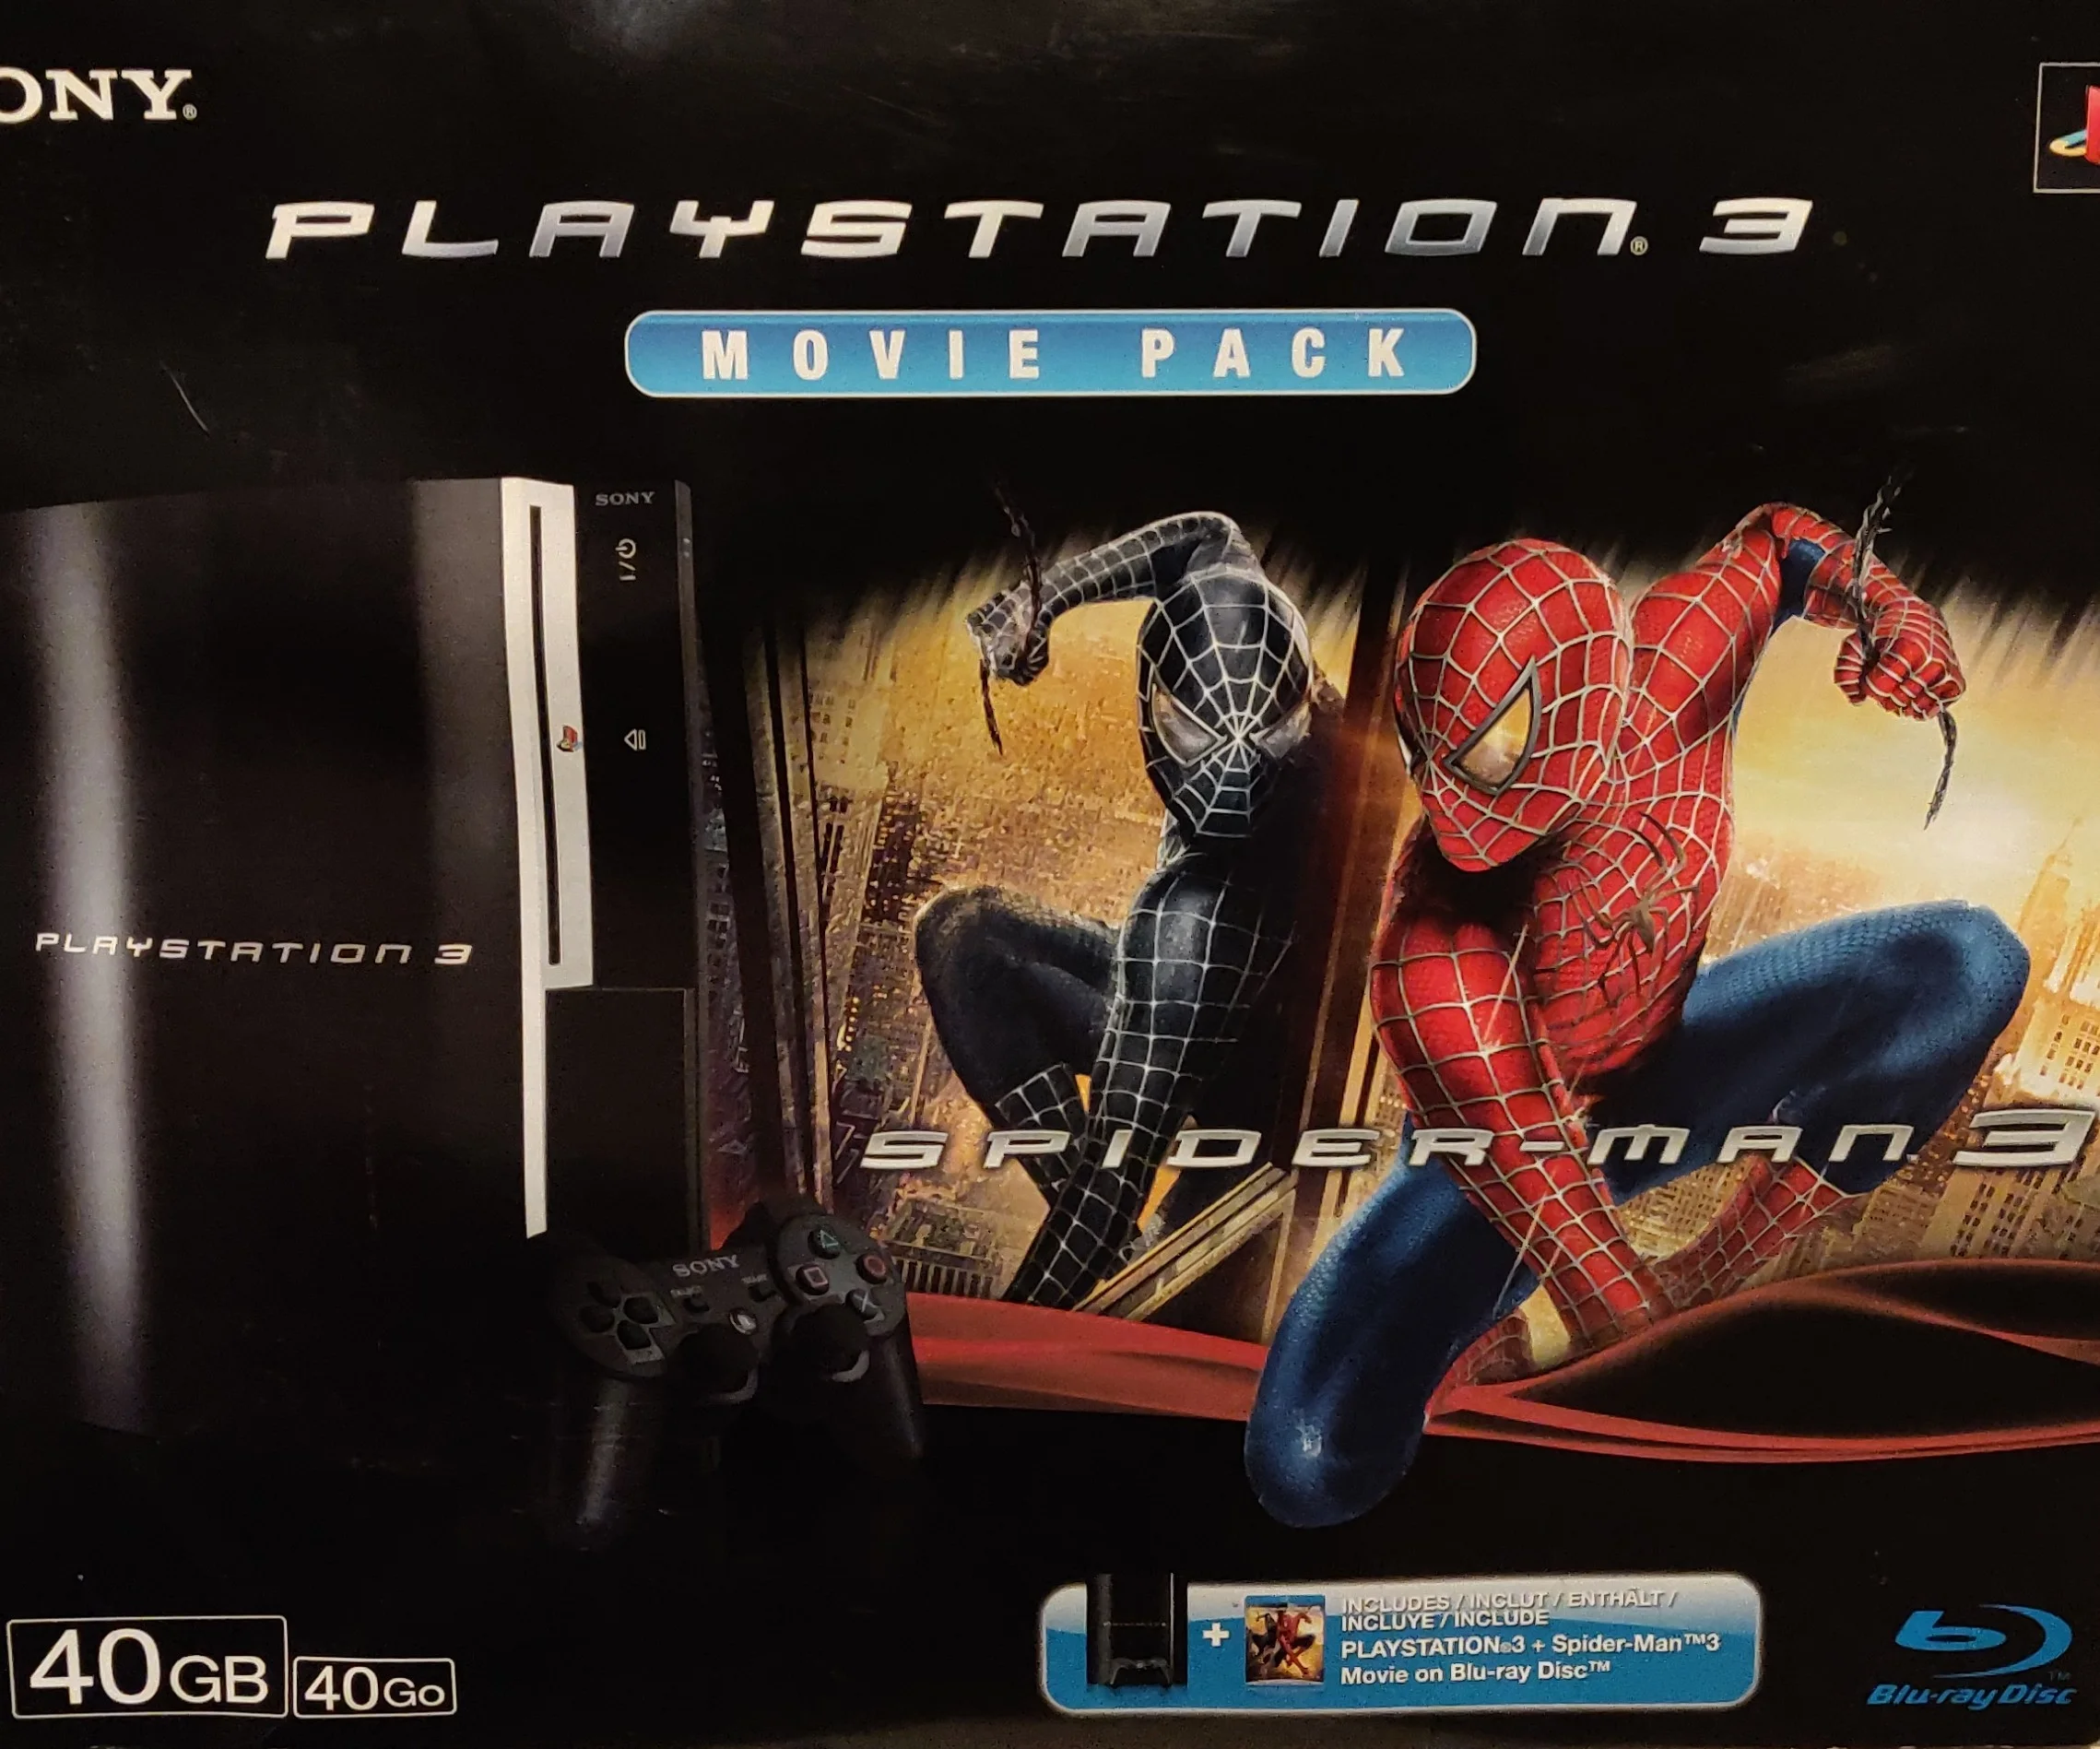  Sony PlayStation 3 Spider-Man 3 Movie Pack